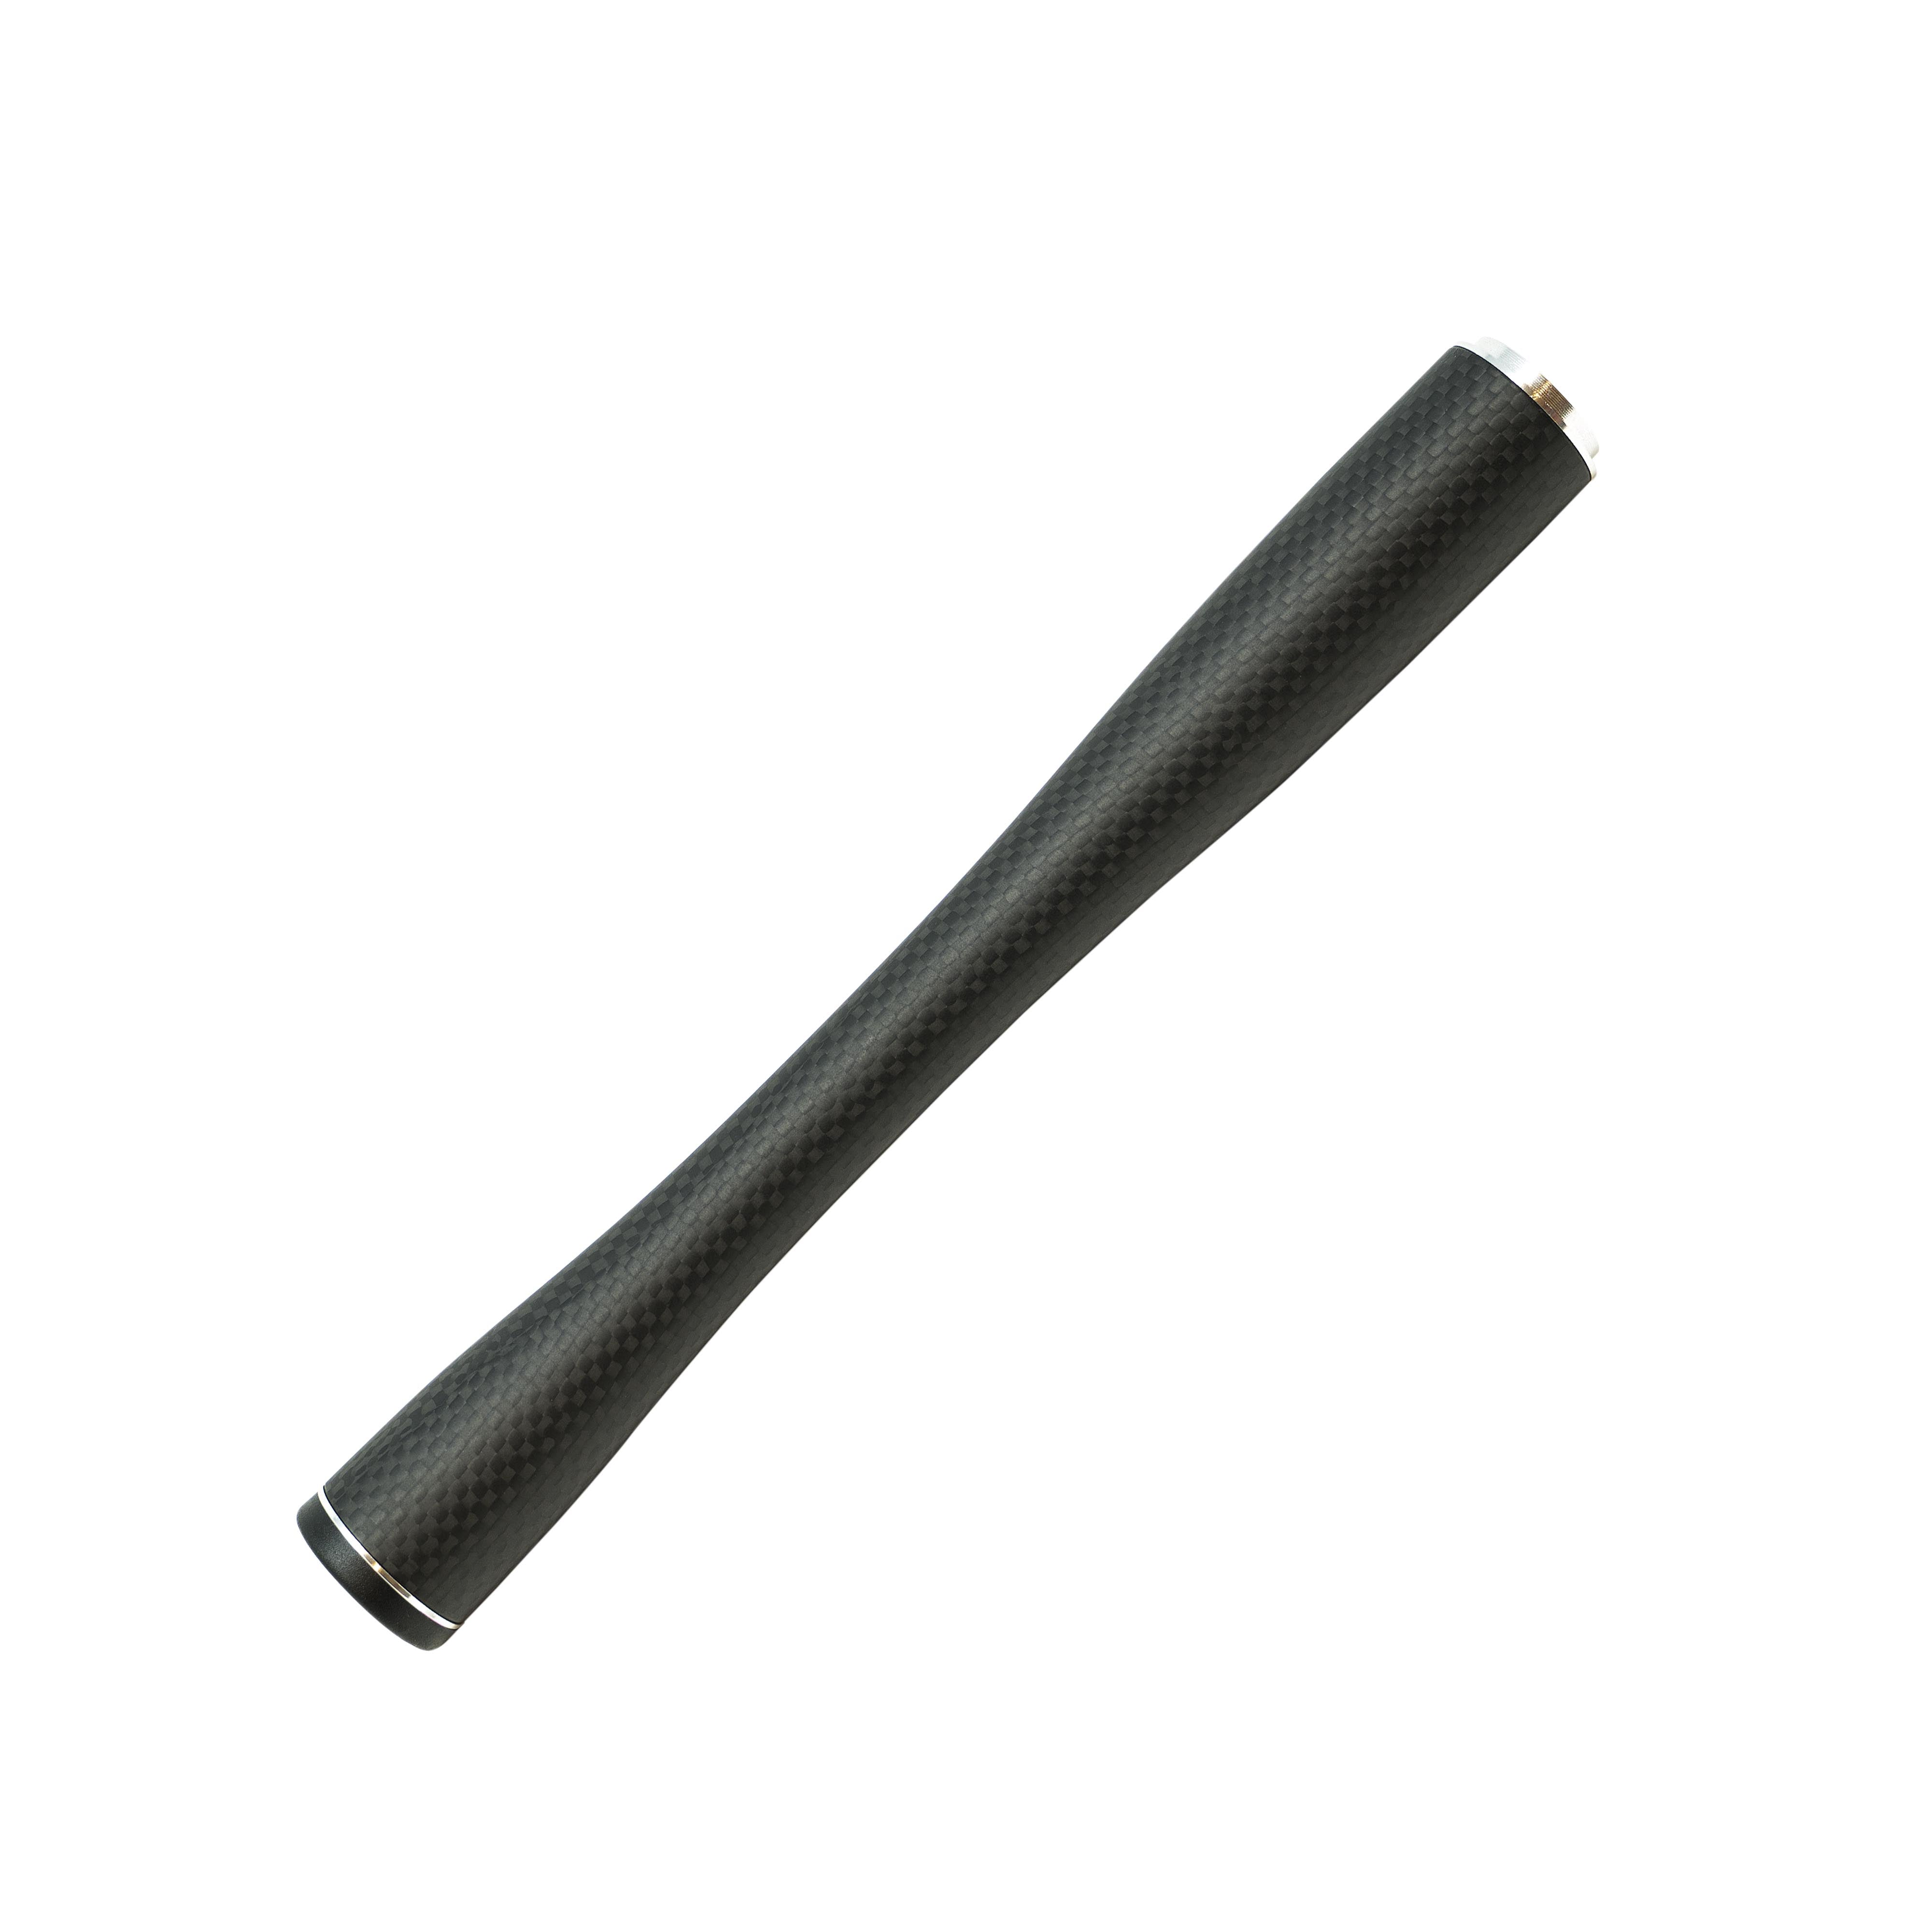 G2 9 Full Length Carbon Handle Grip Kit for Casting Rods